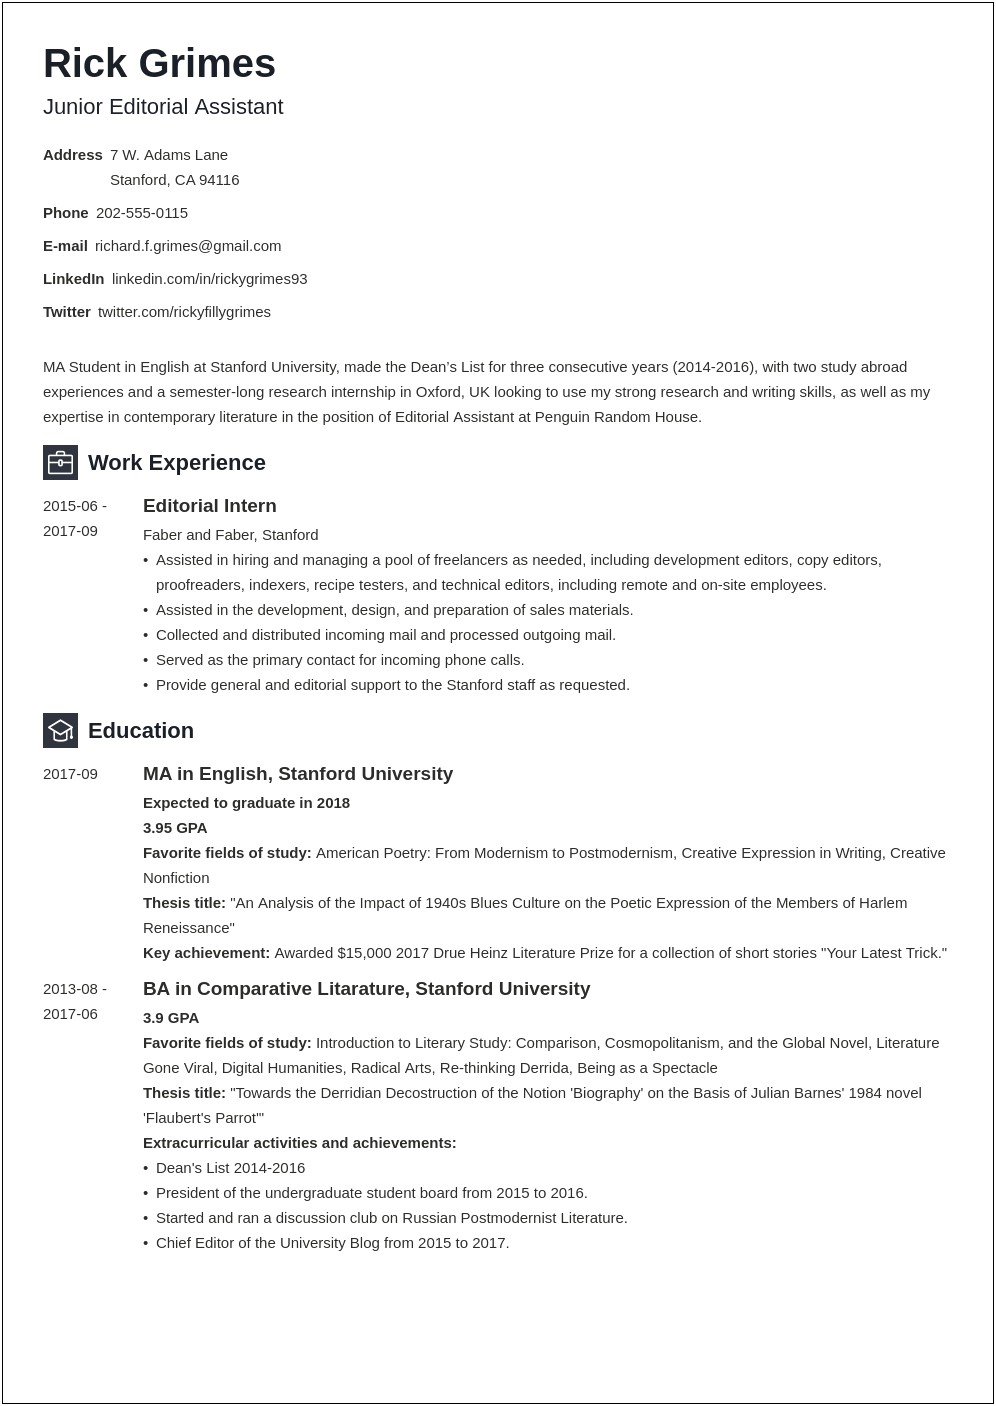 Sample Resume For New Job Seekers